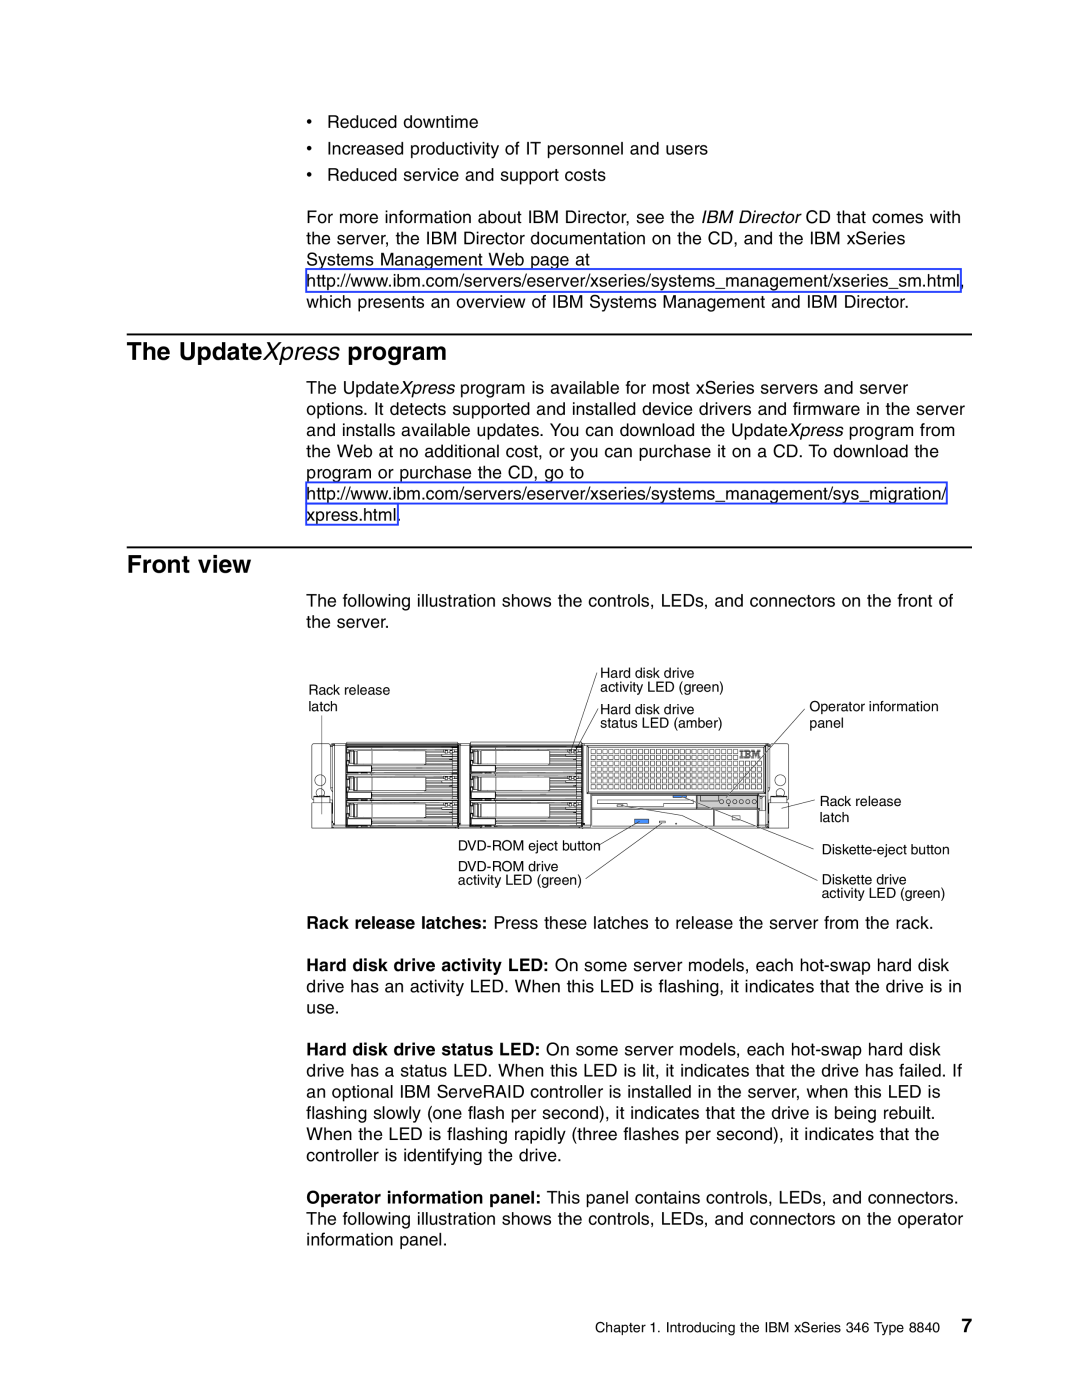 IBM 8840 manual The UpdateXpress program, Front view 